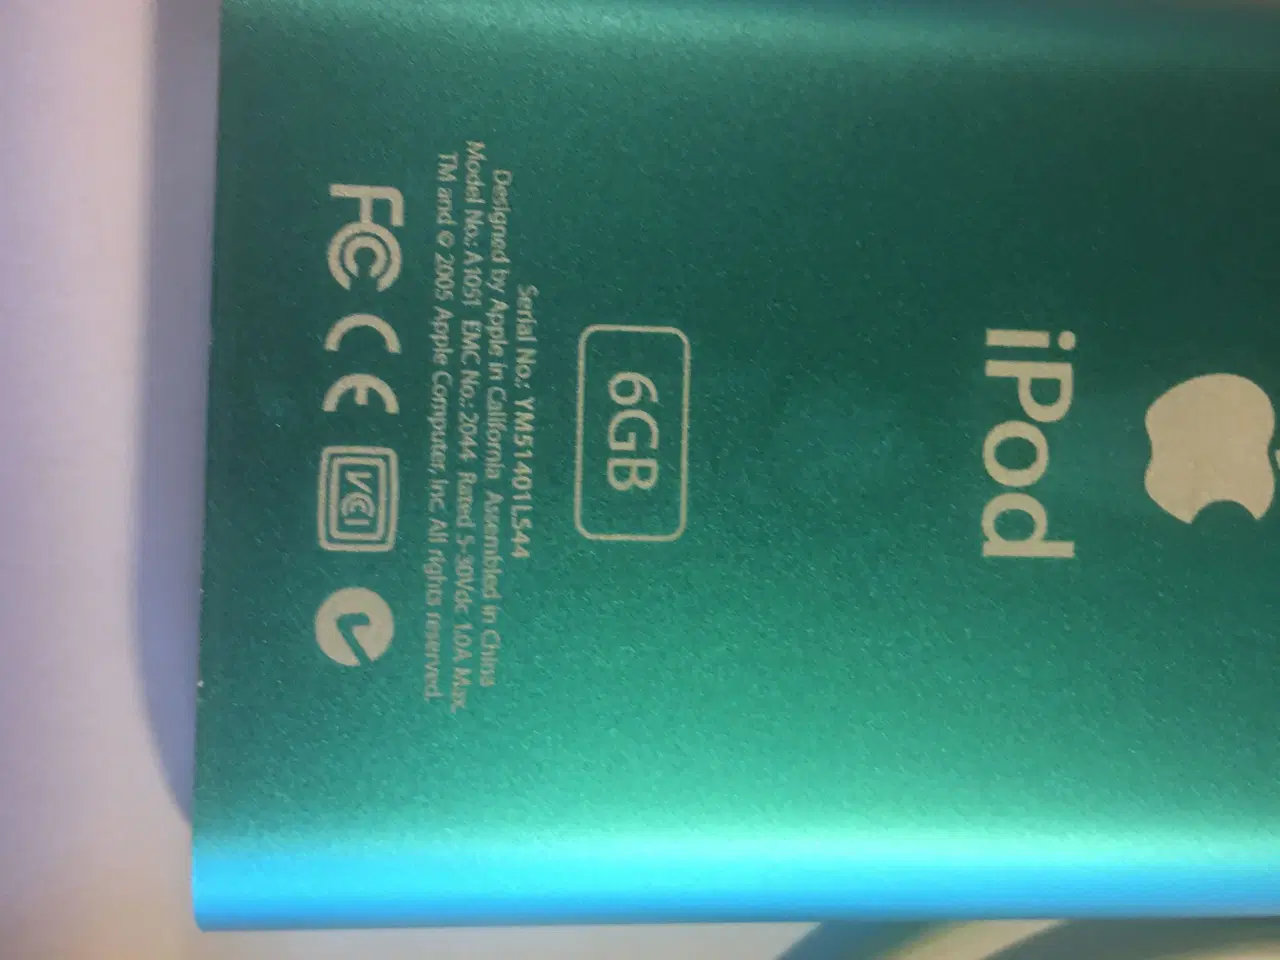 Billede 2 - Classsic IiPod og iPod nano